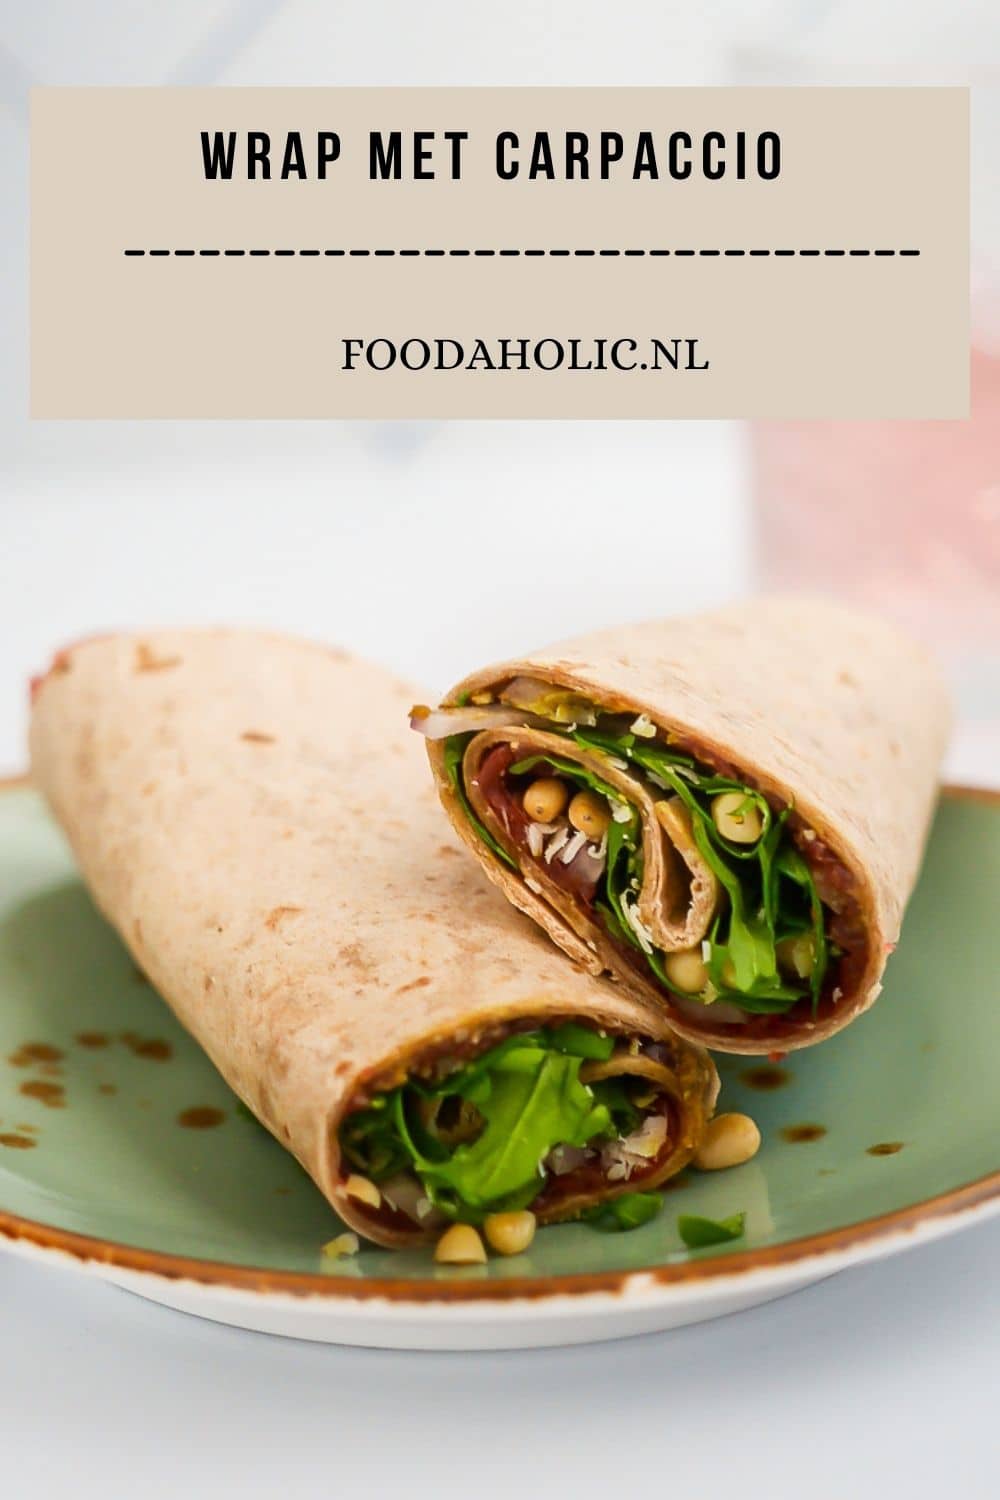 Wrap met carpaccio | Pinterest | Foodaholic.nl